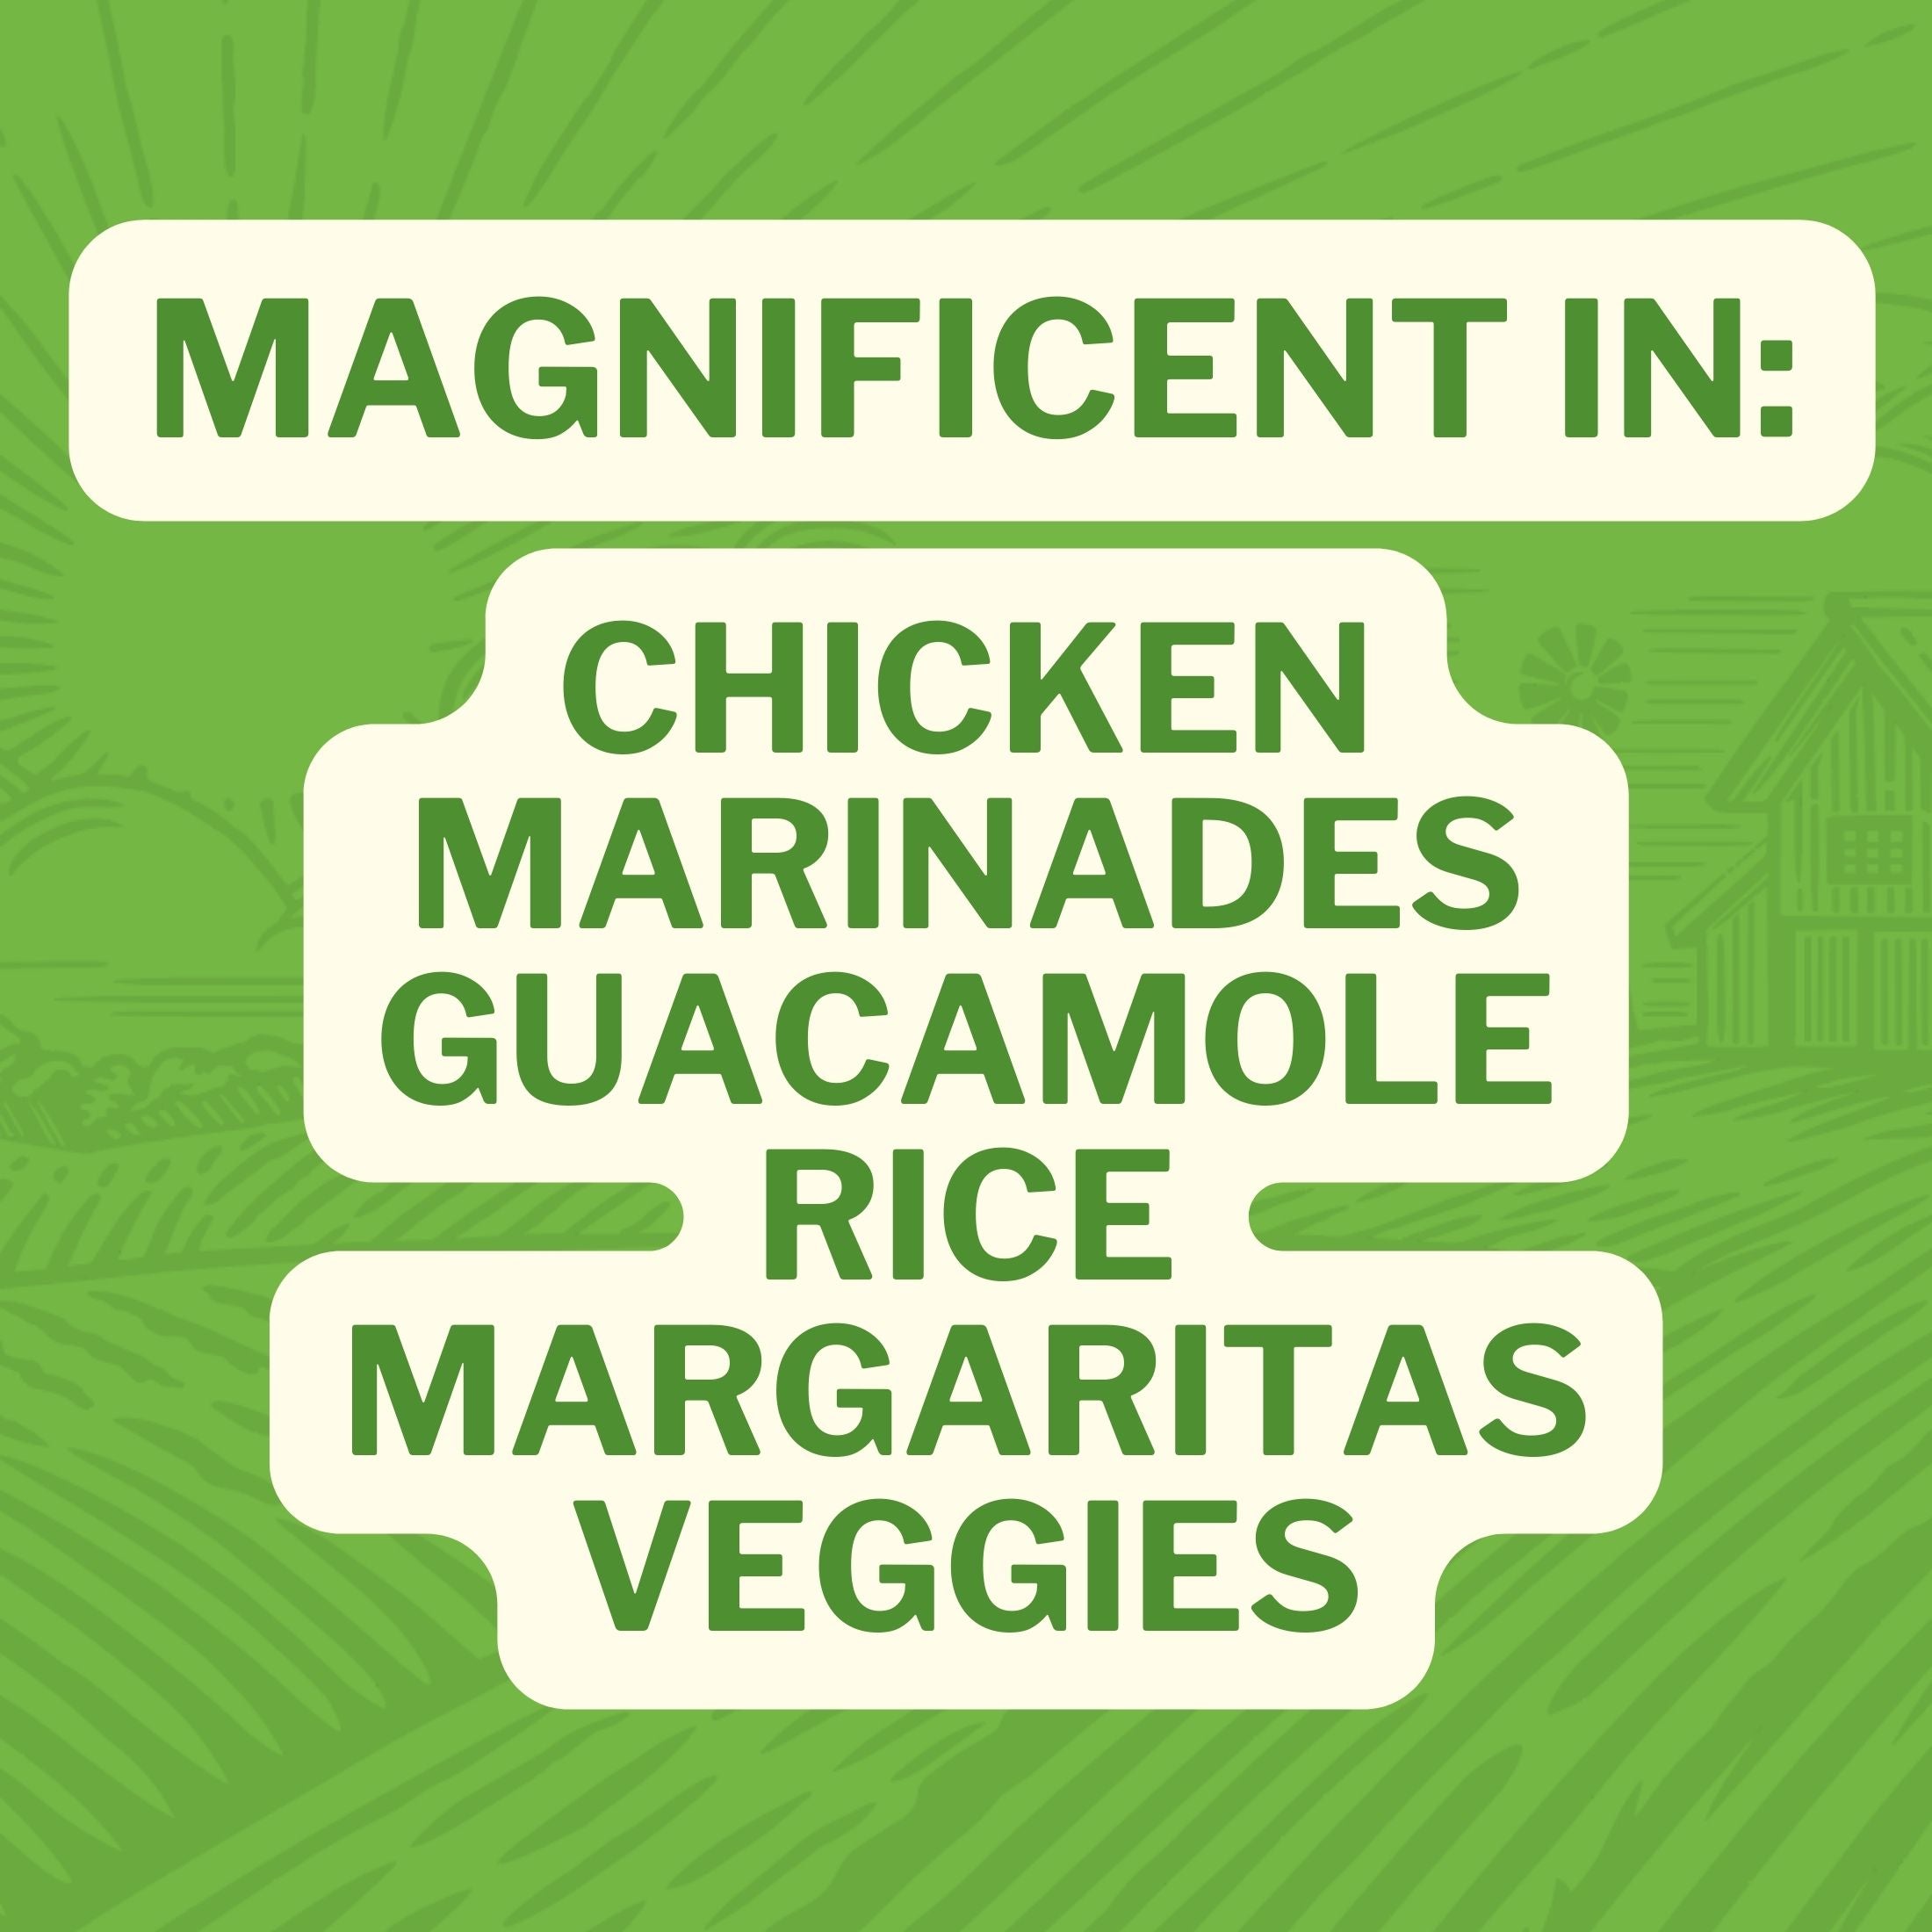 Magnificent In: Chicken Marinades Guacamole Rice Margaritas Veggies